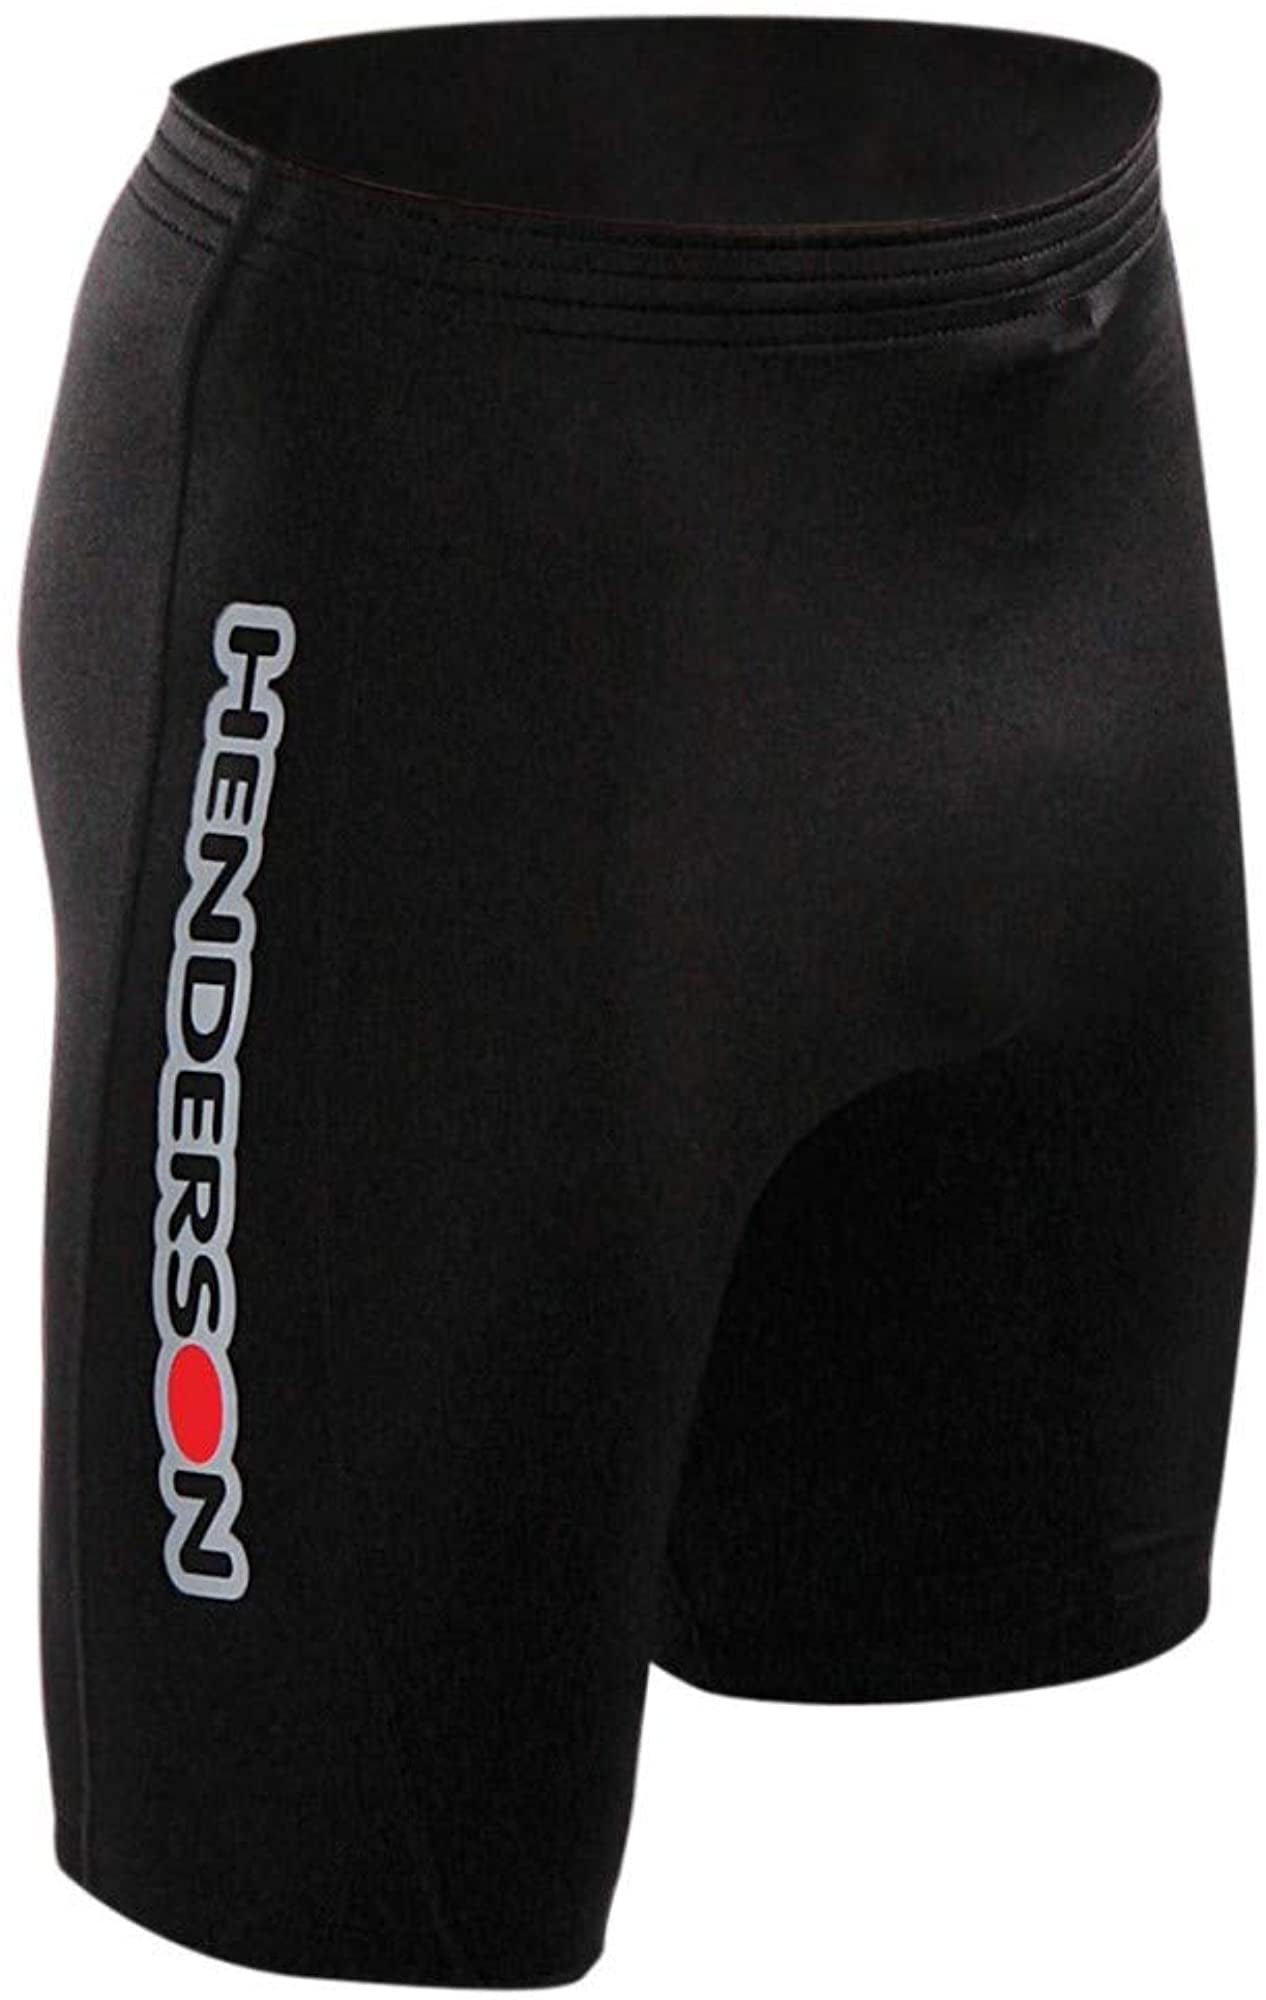 Henderson Unisex Lycra Hot Skin Biker Style Shorts